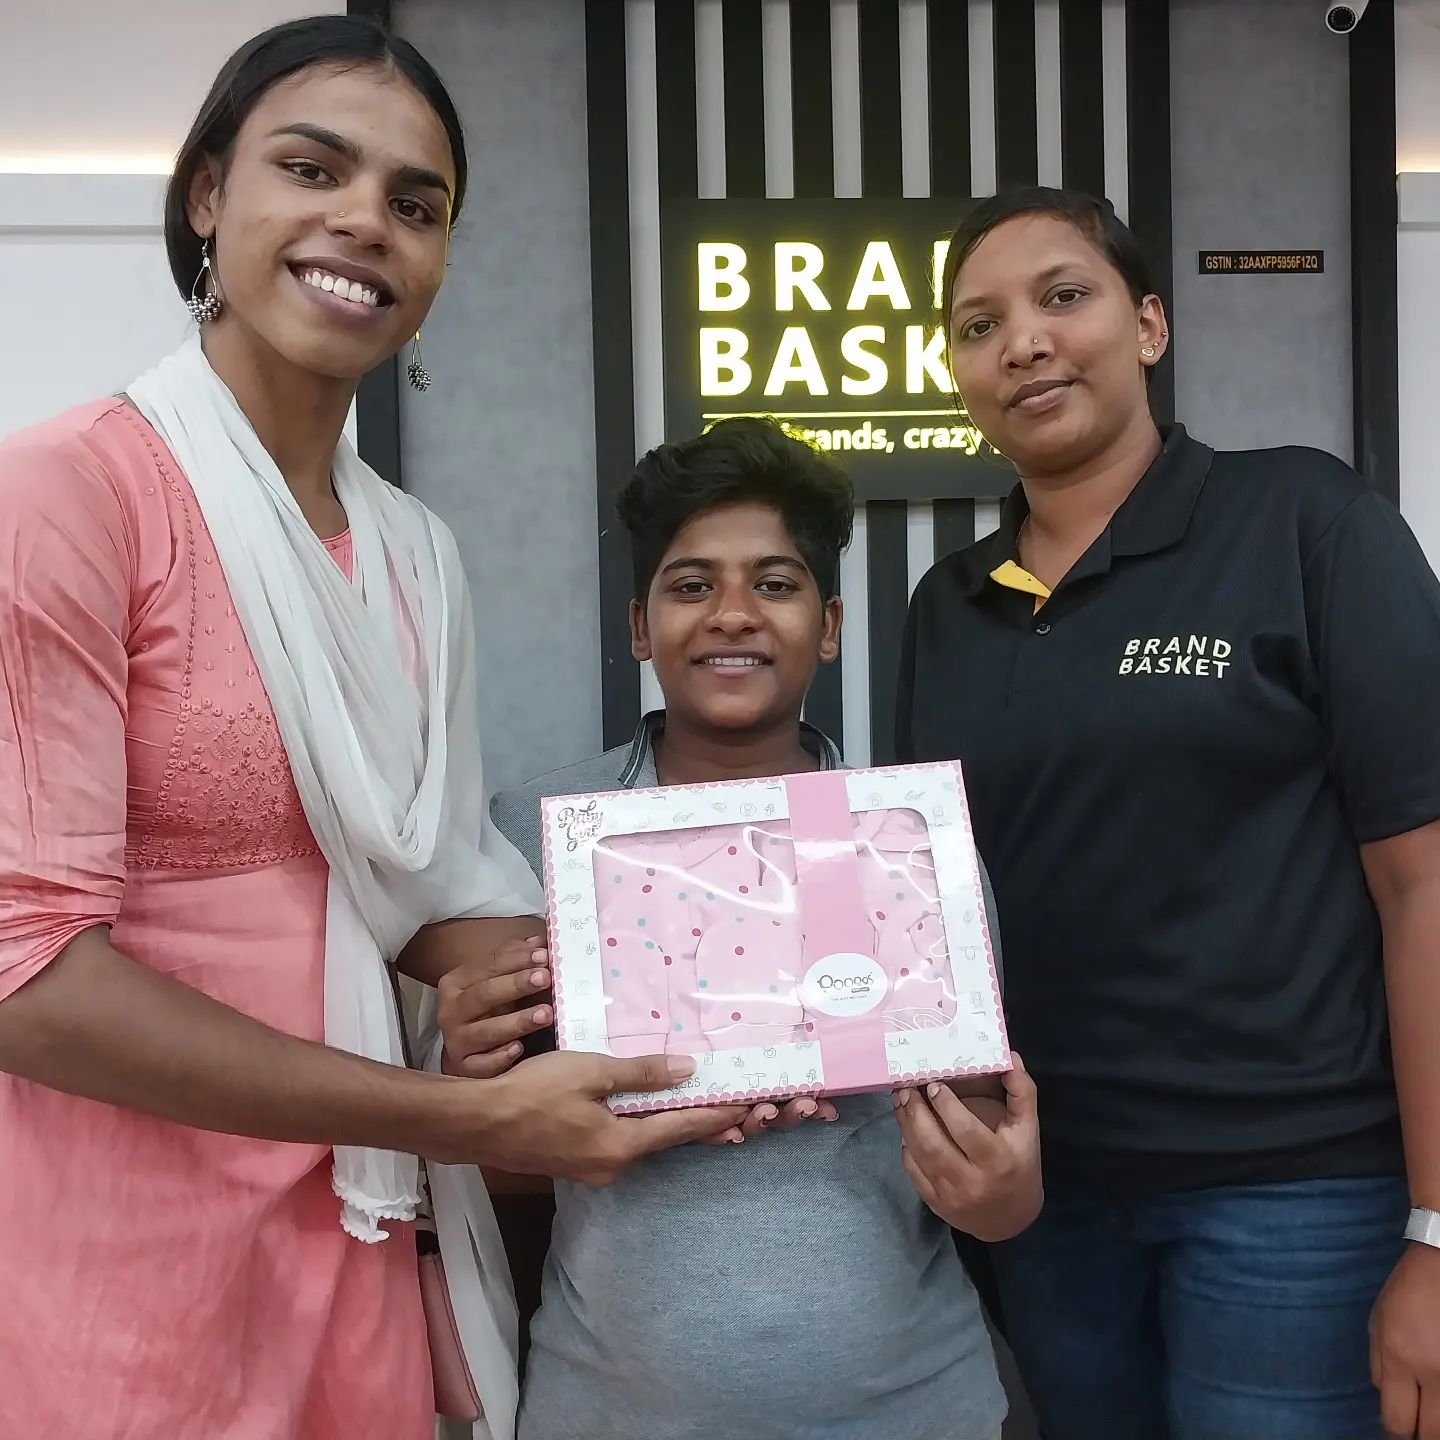 indias first transgender maternity photoshoot